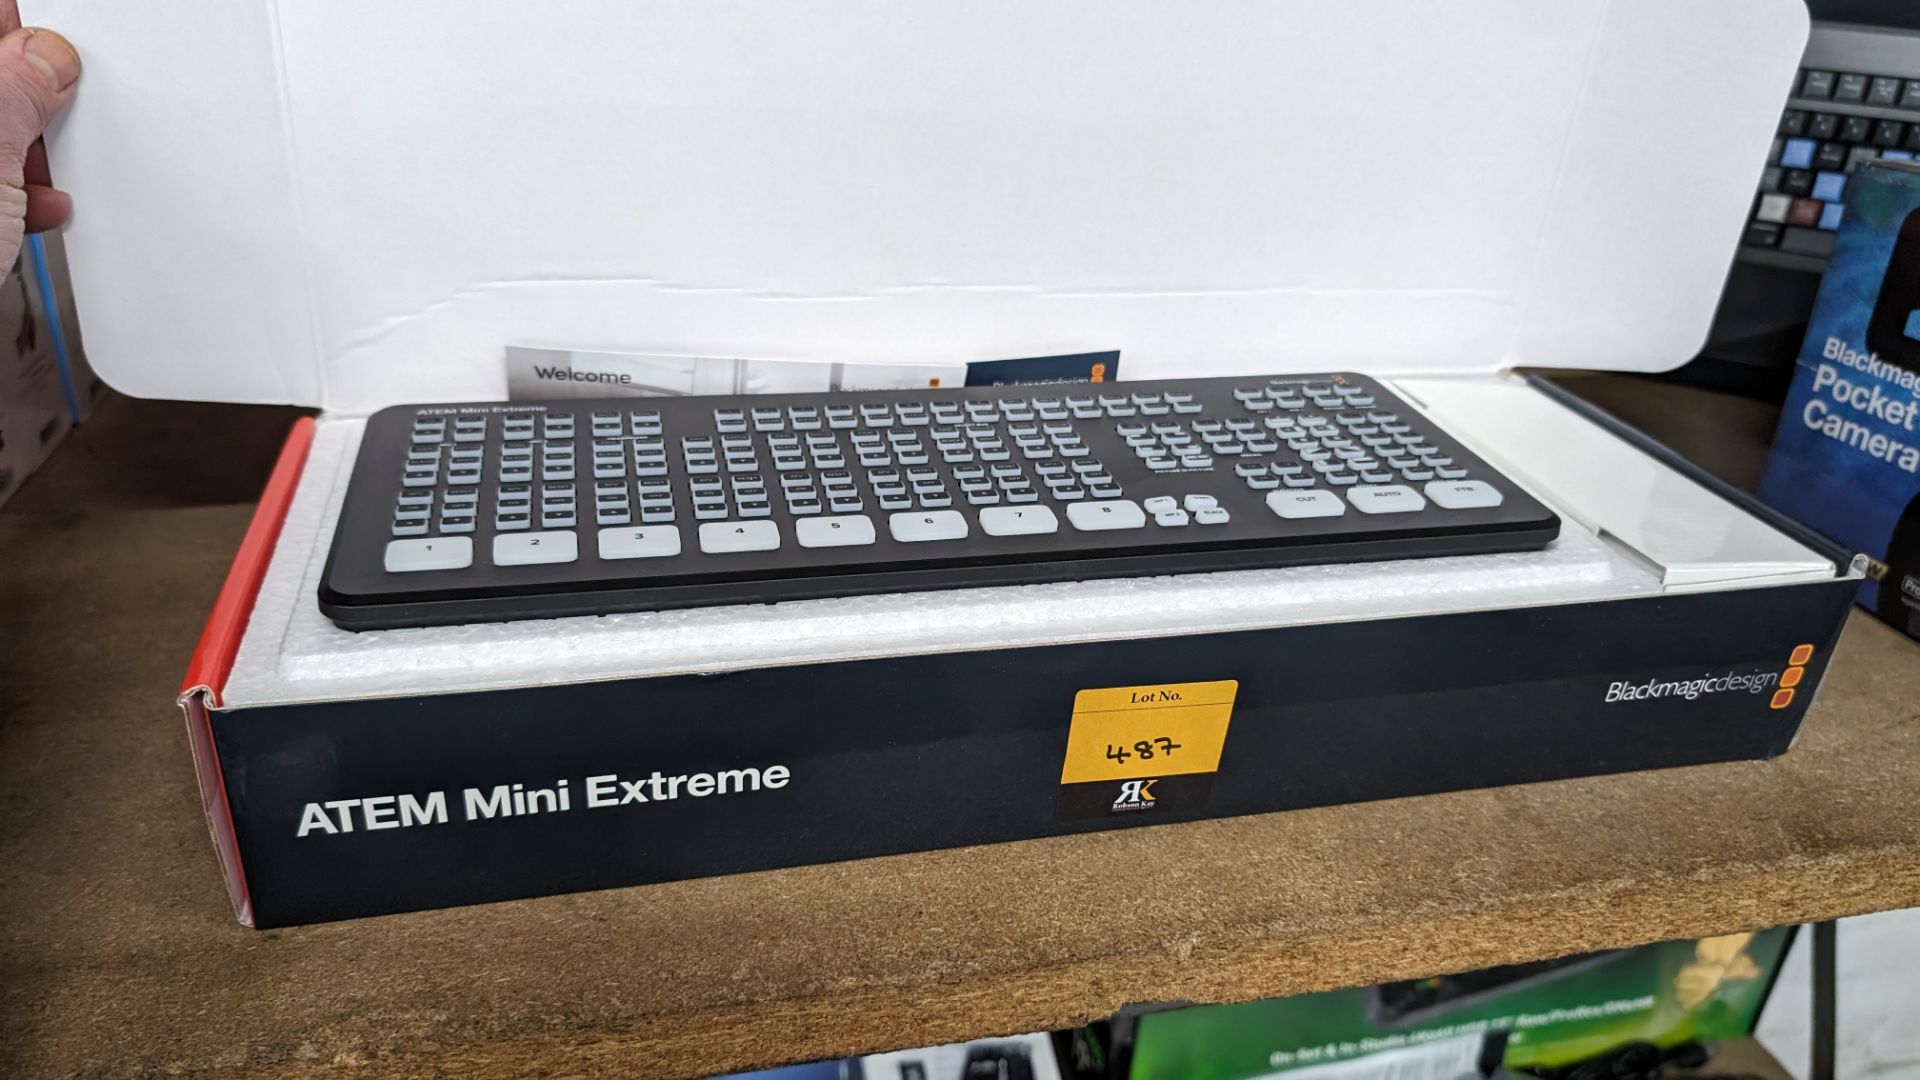 Blackmagic Design ATEM Mini Extreme live stream and record editing keyboard